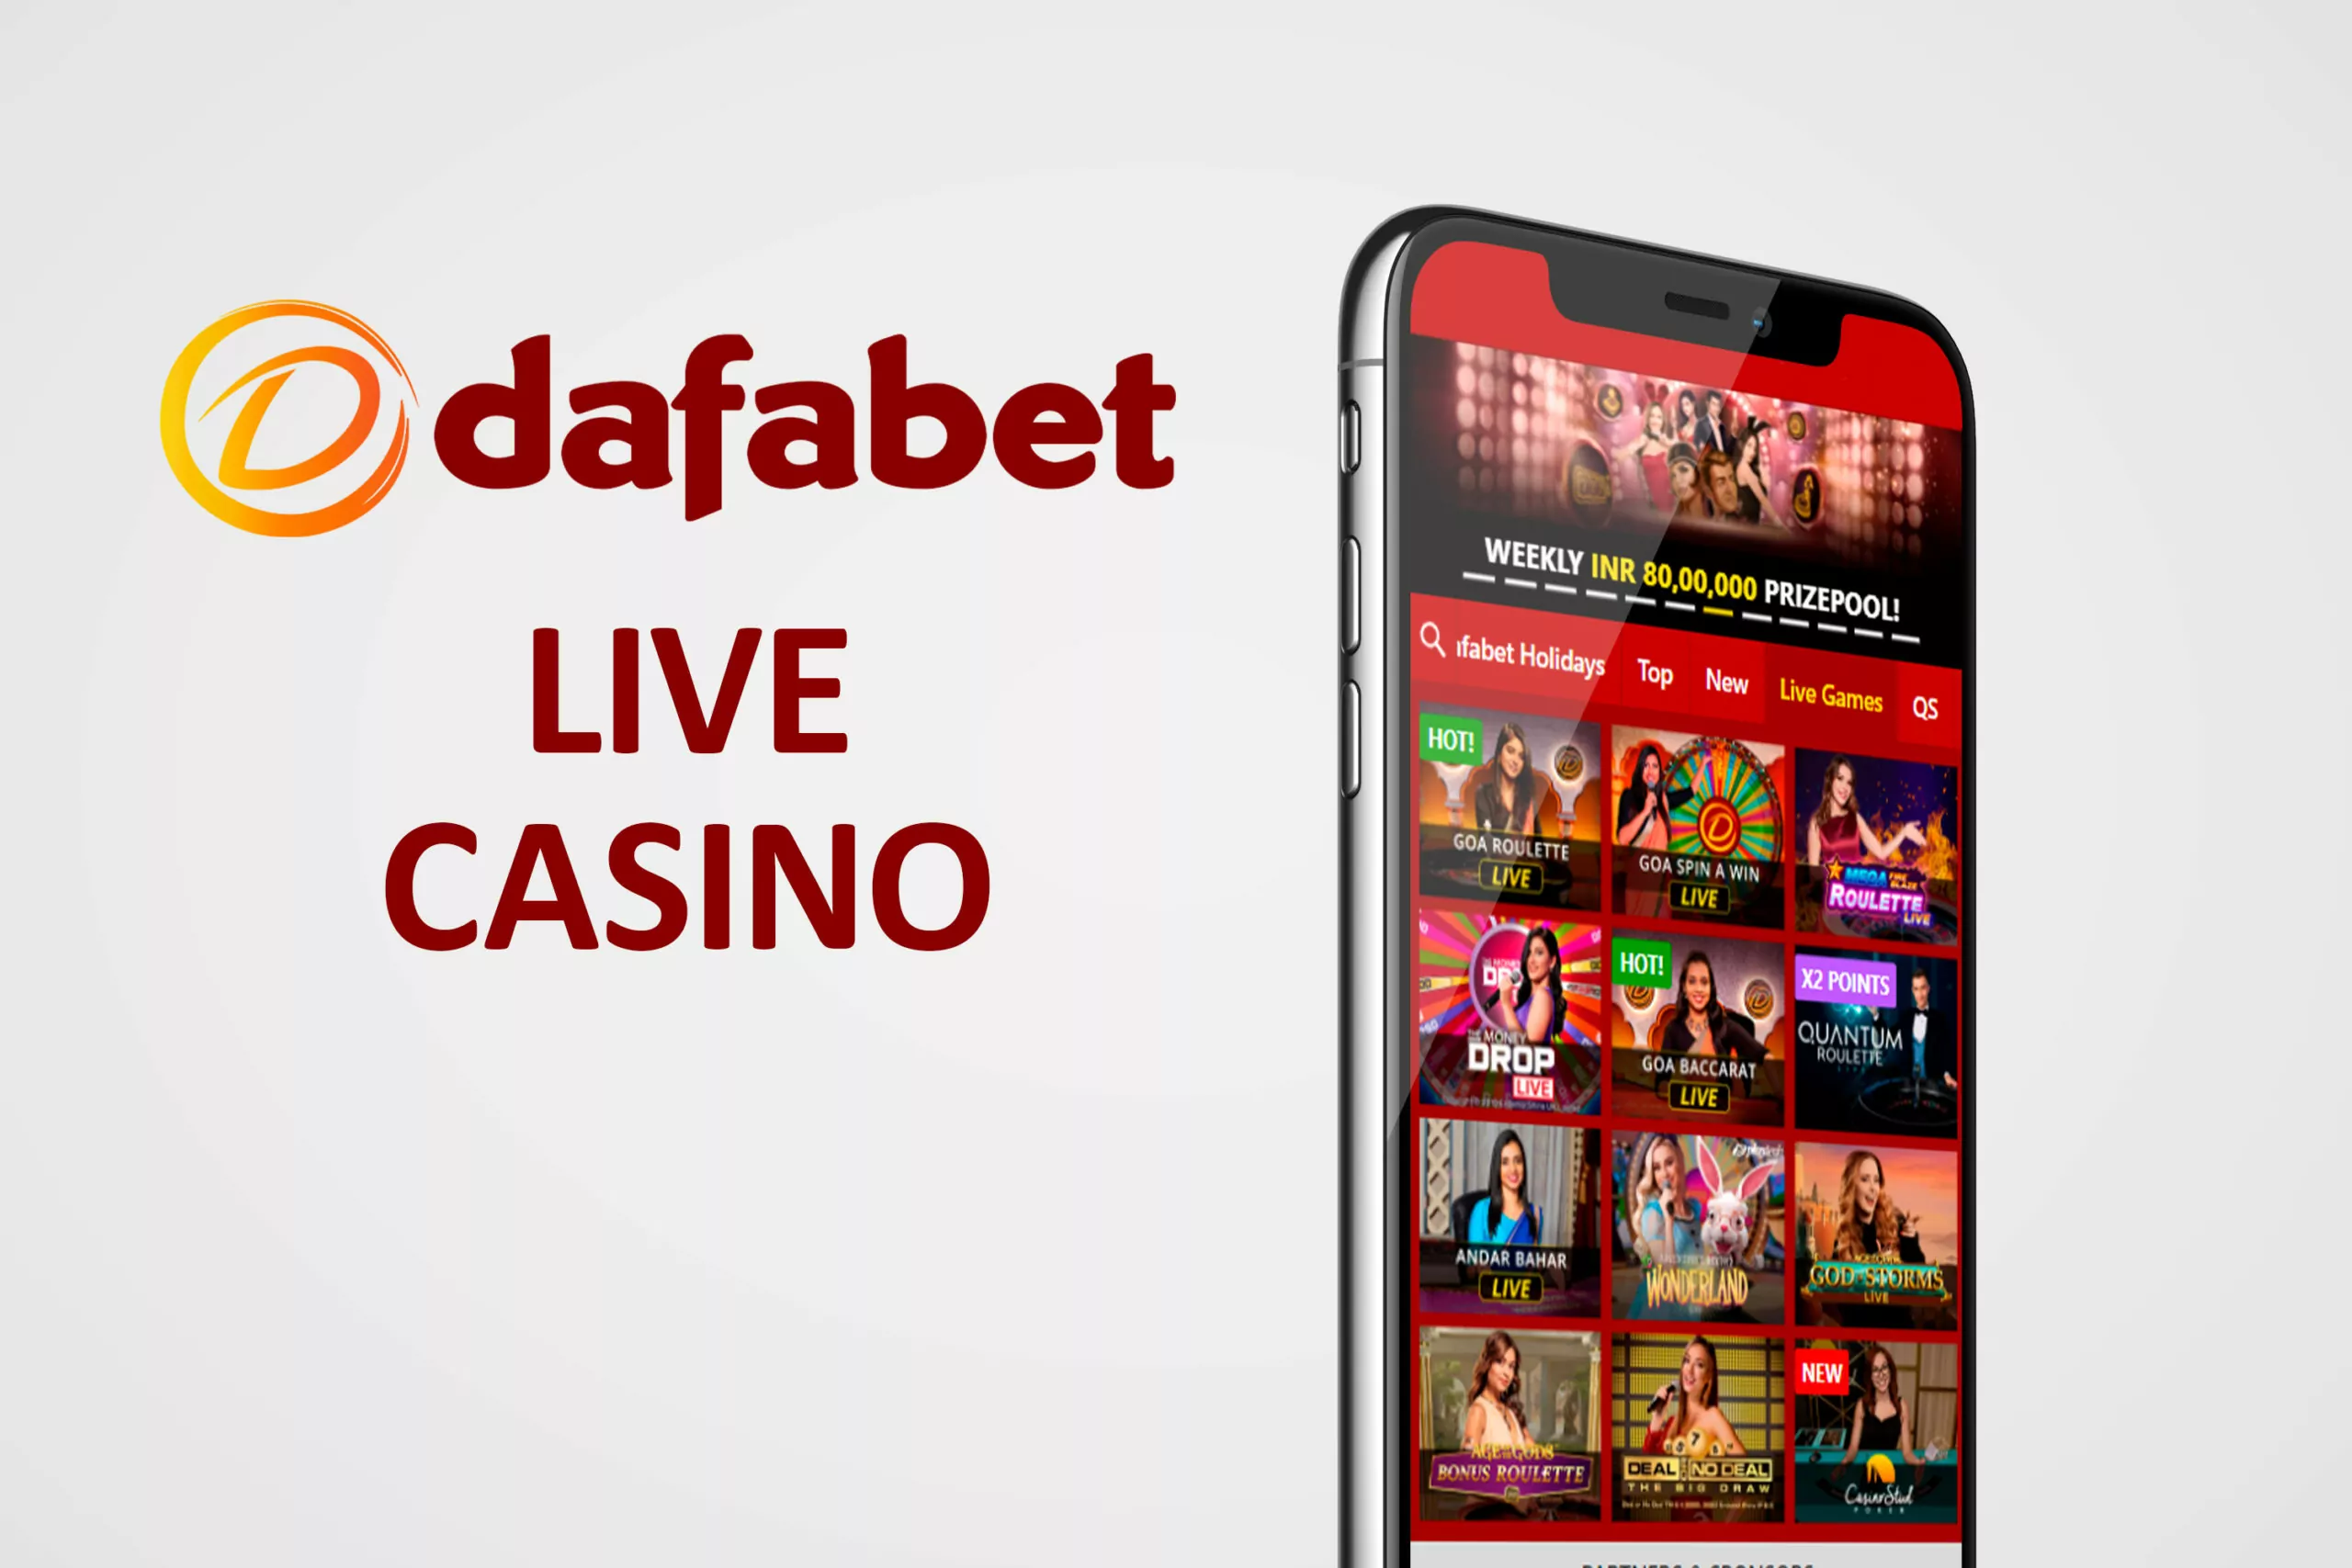 Dafabet casino also offers live casino games.